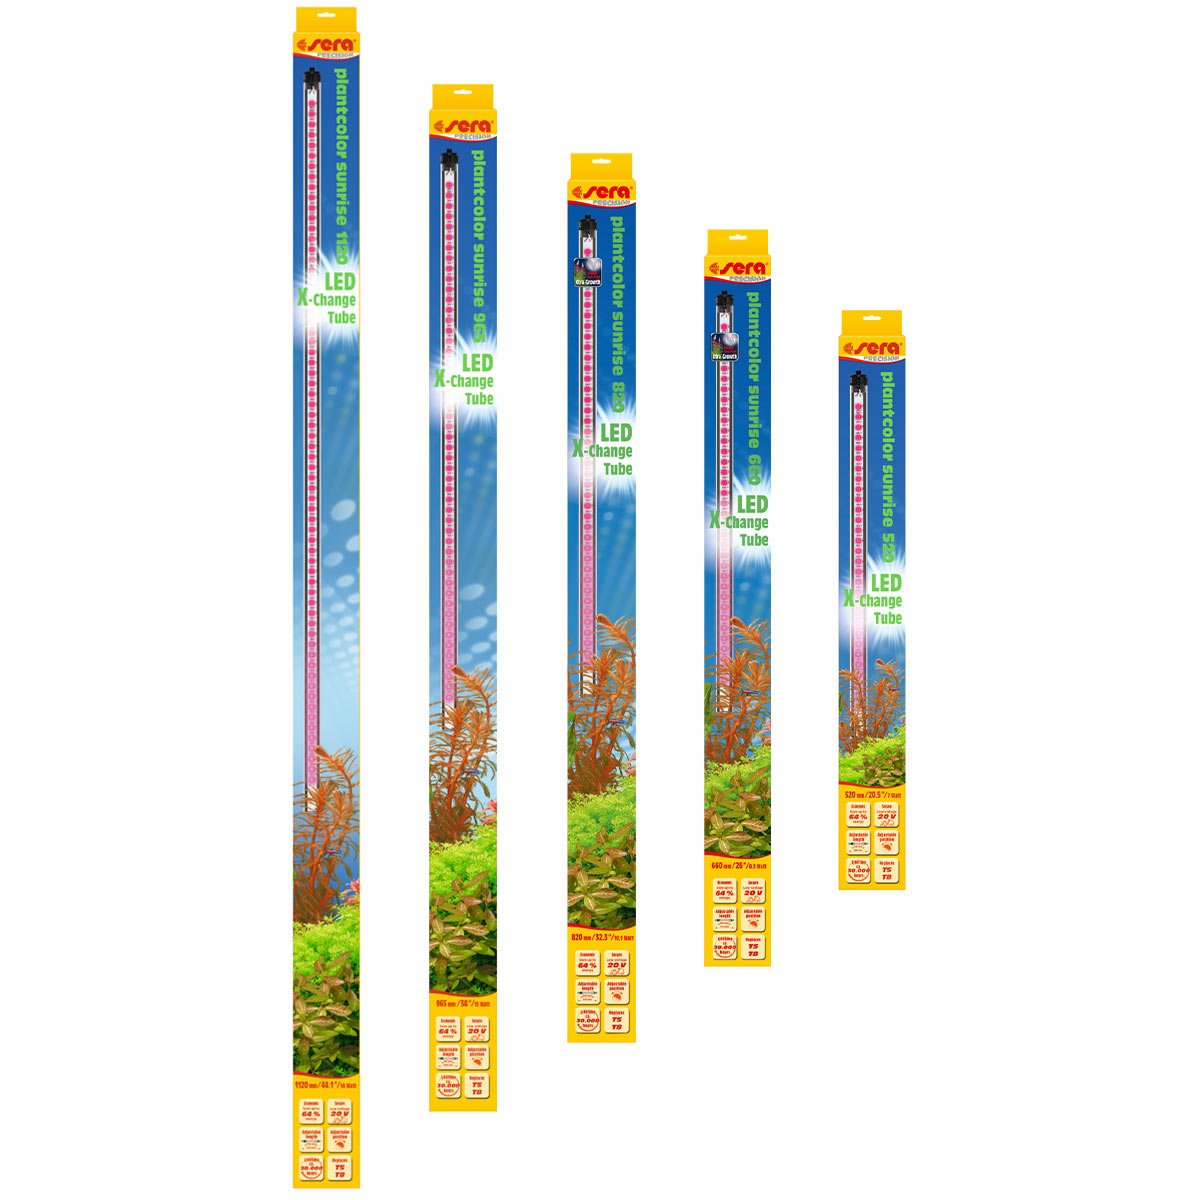 sera LED X-Change Tube plantcolor sunrise 660mm / 8,3W von Sera